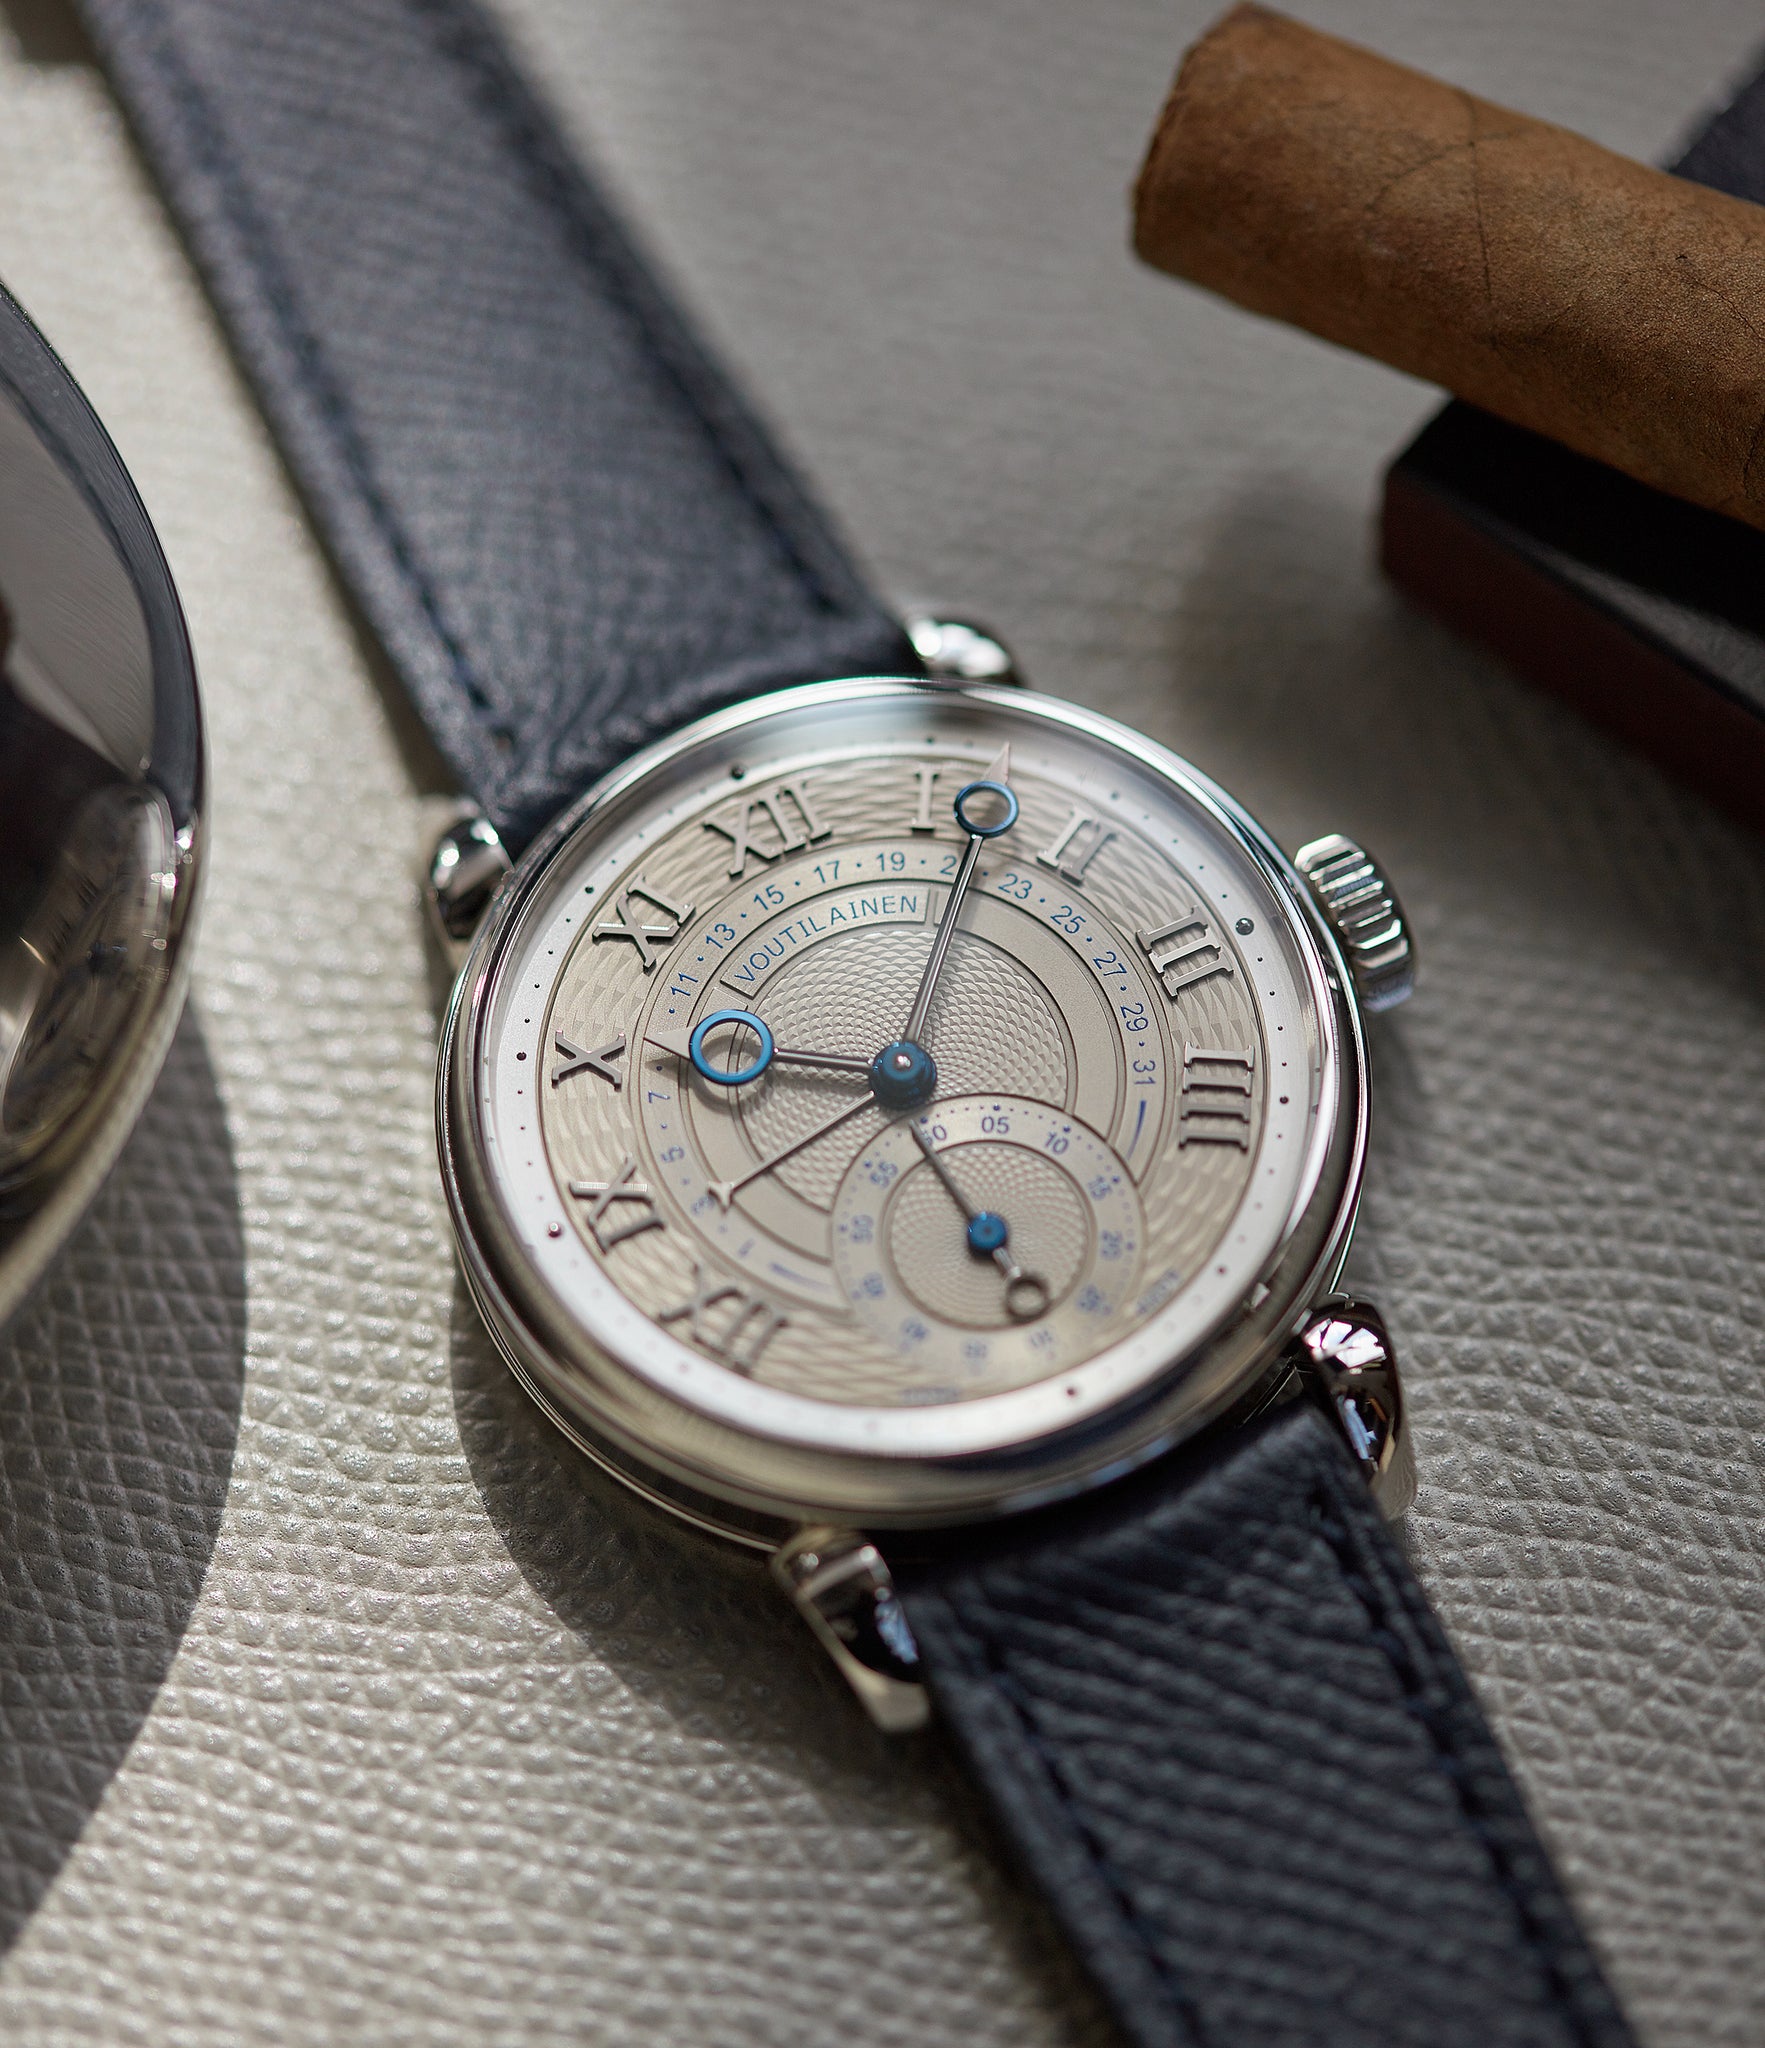 independent watchmaker Kari Voutilainen 217QRS Retrograde Date platinum dress watch for sale online at A Collected Man London rare watches